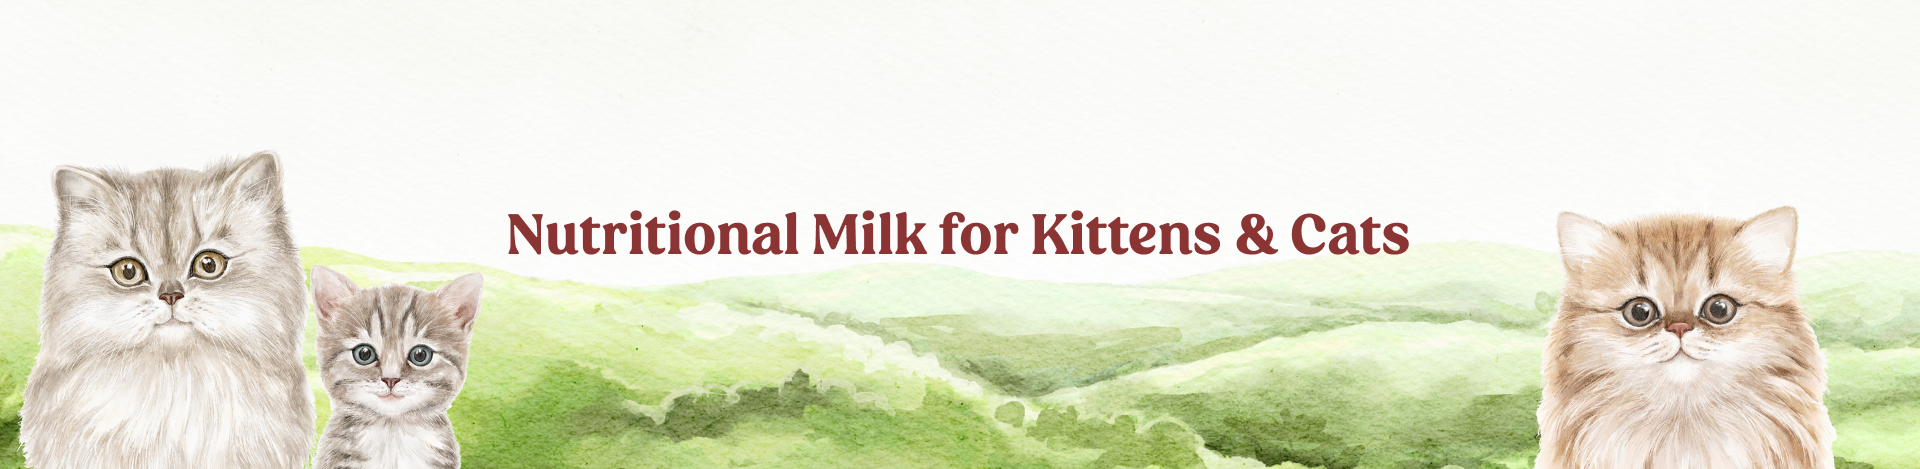 Nutritional Milk for Kittens & Cats Banner